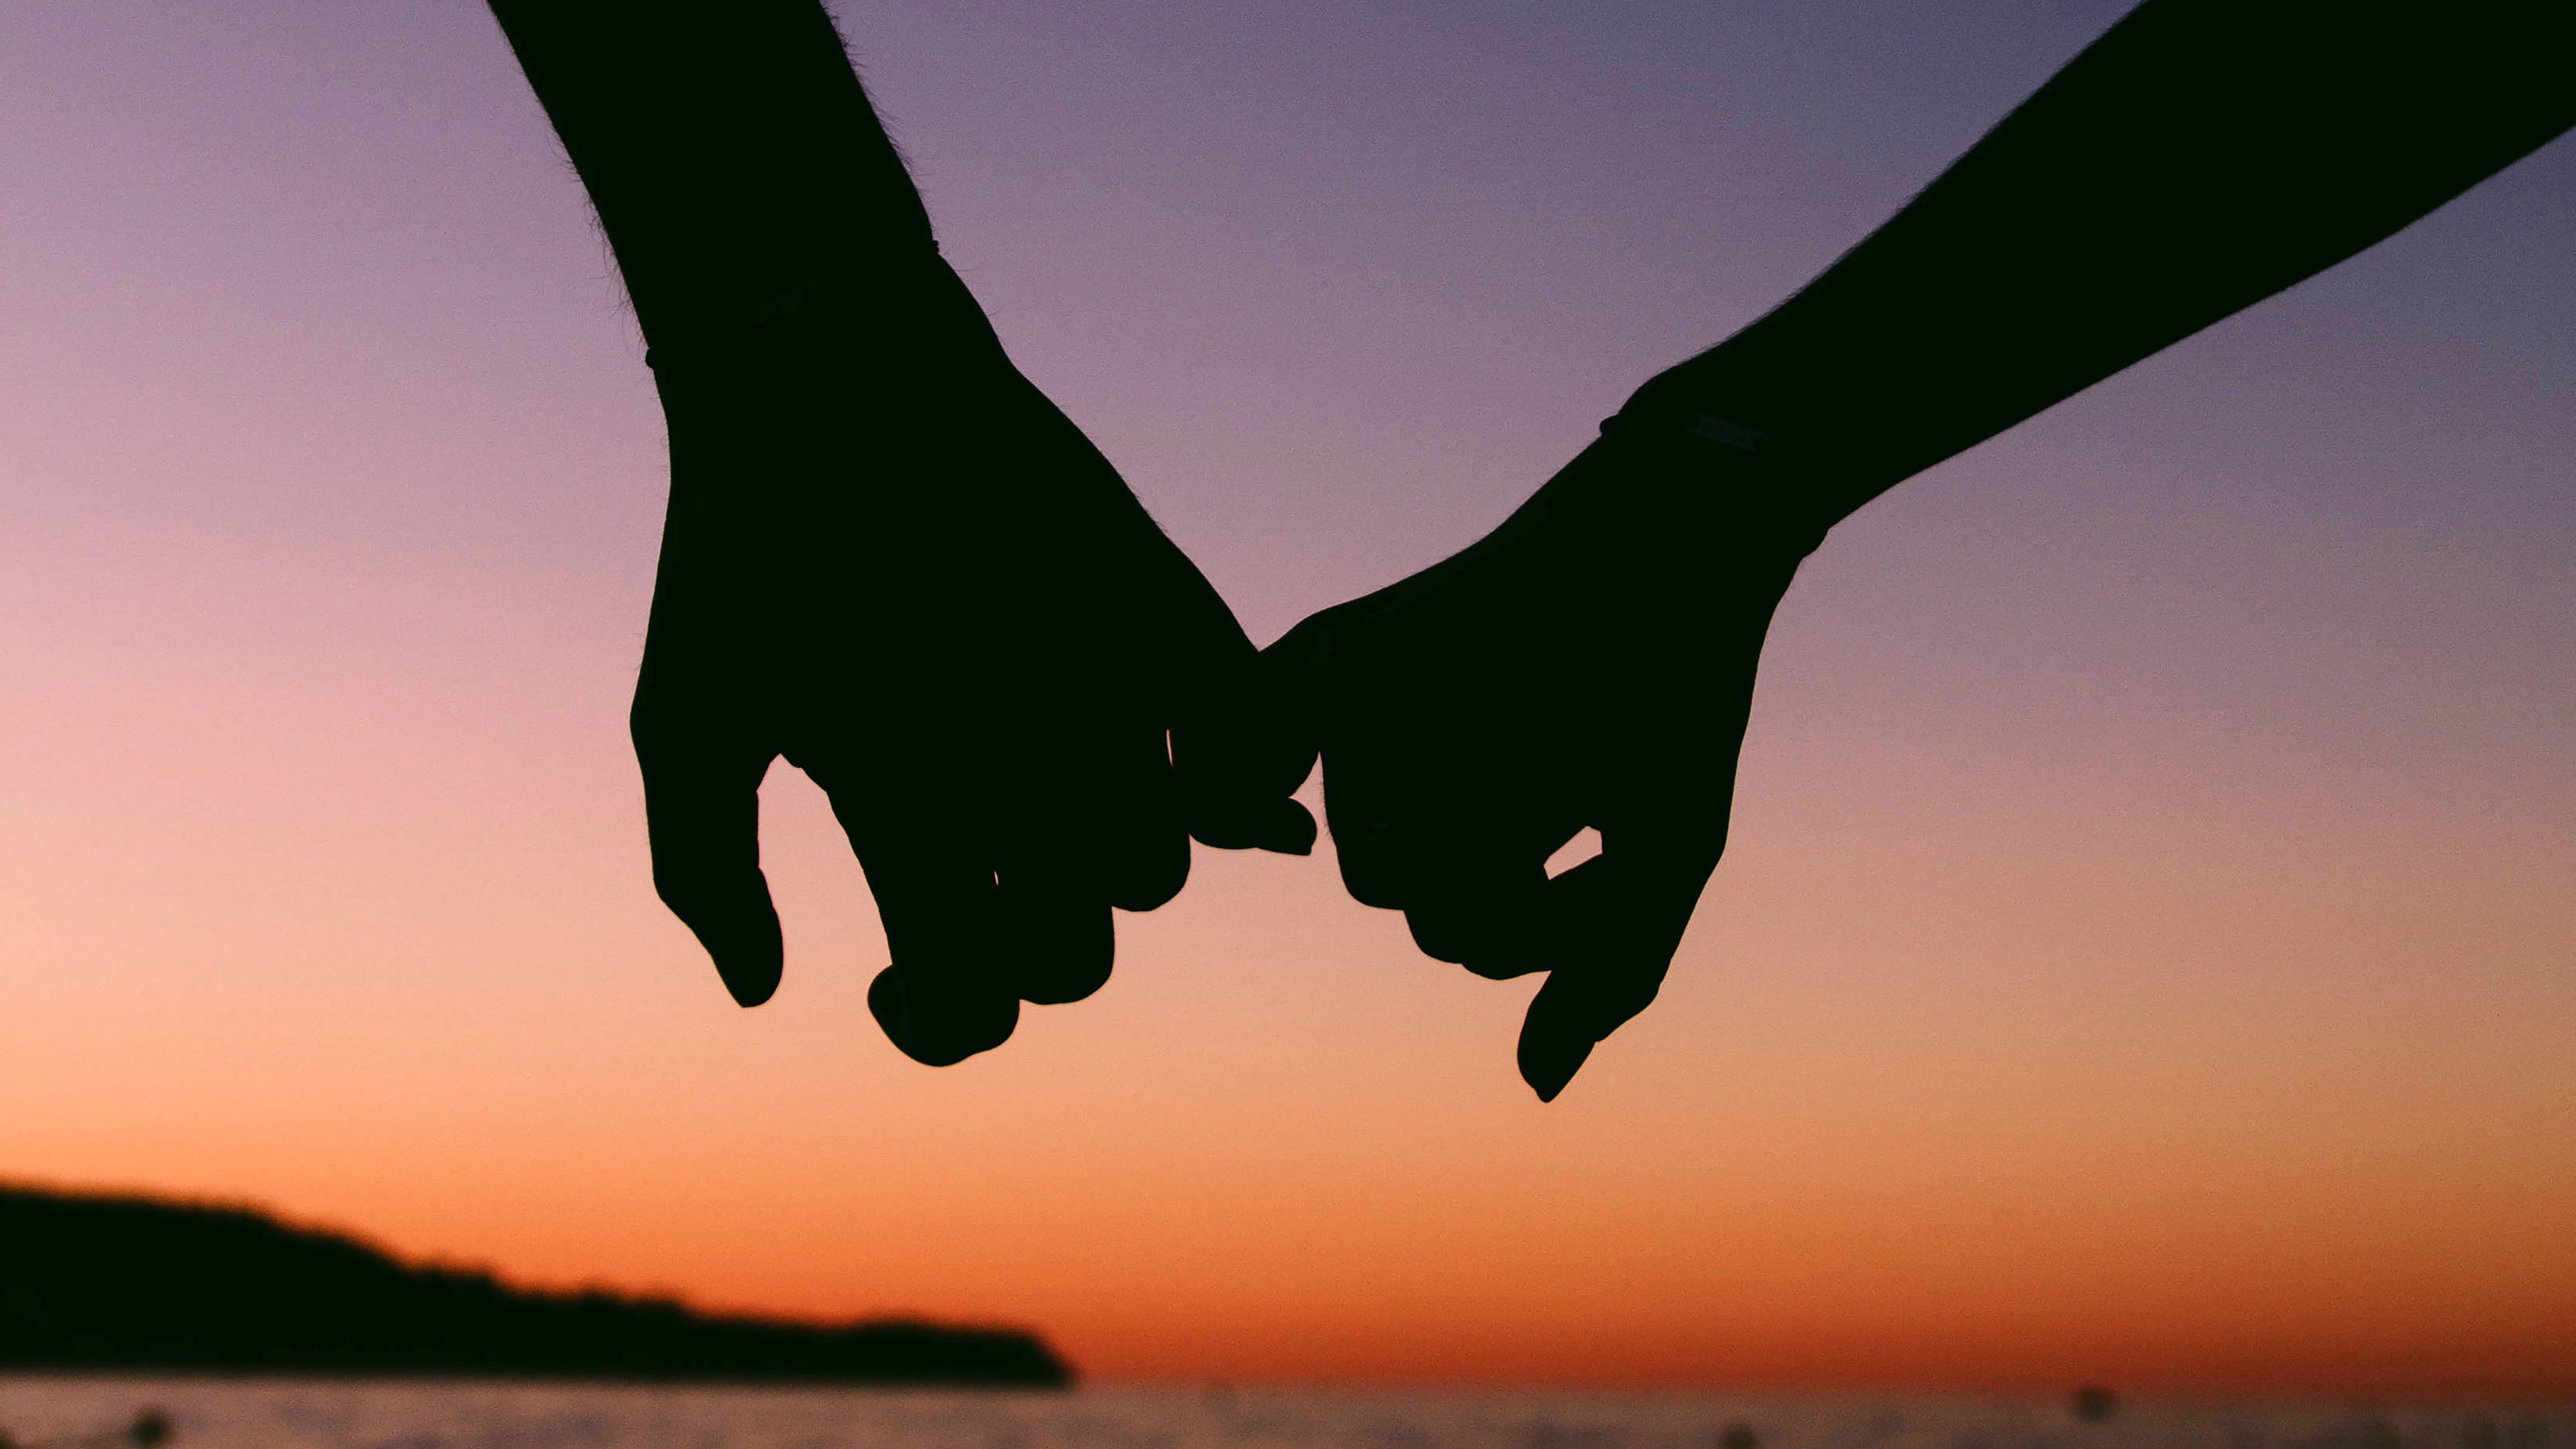 Hands together, Couple, Silhouette, Sunset, Romantic, 4k Free deskk wallpaper, Ultra HD